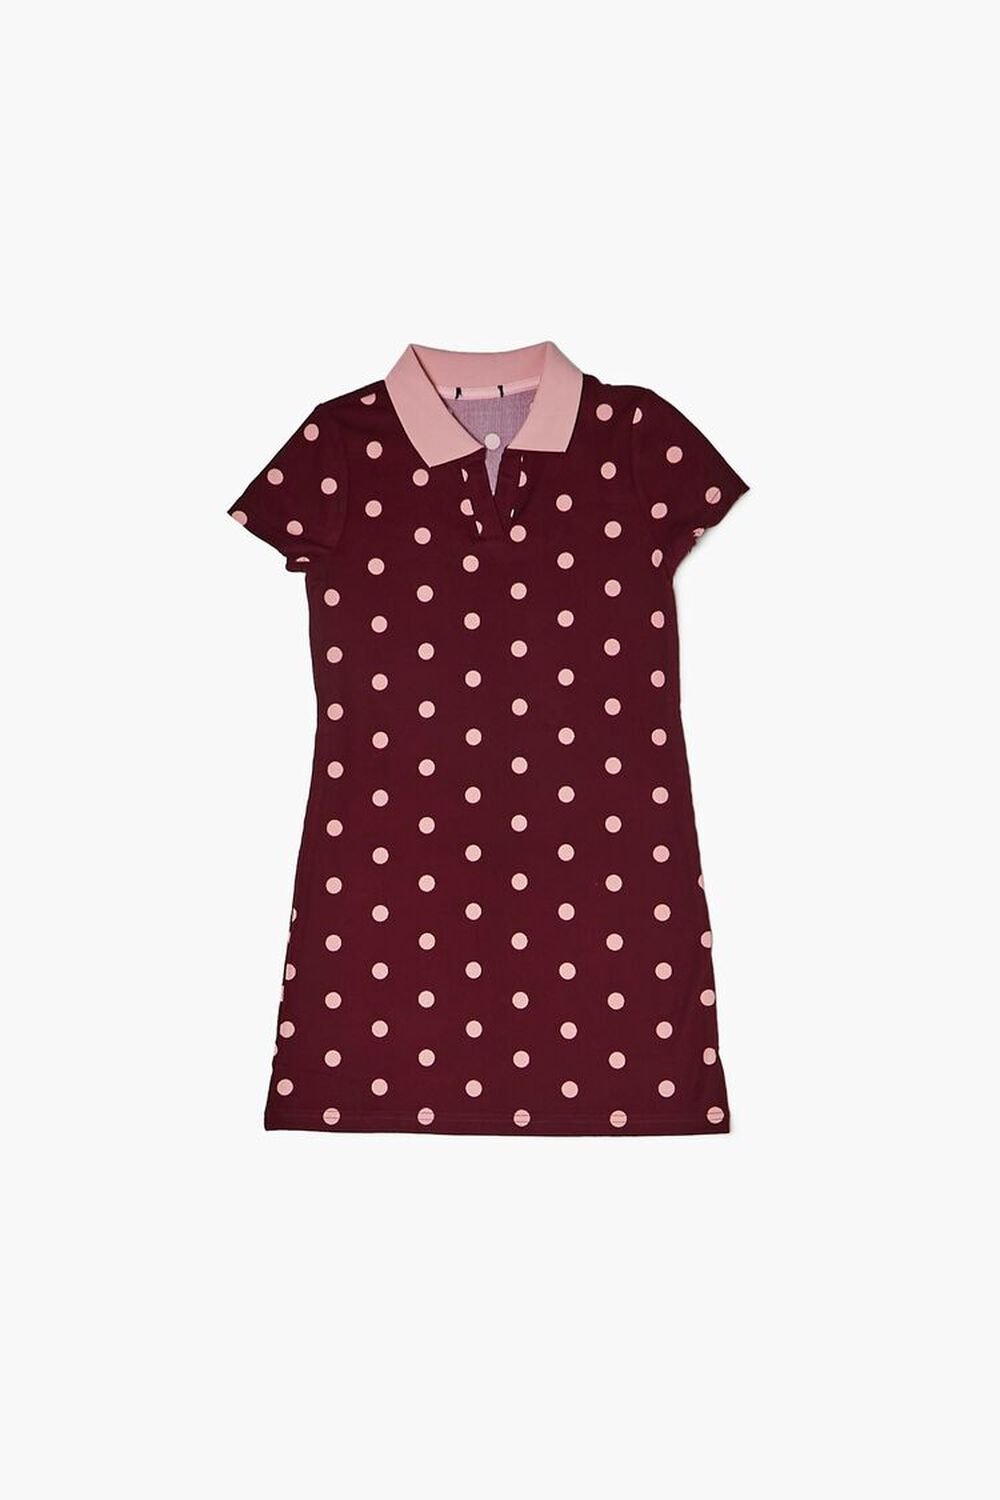 BURGUNDY/PINK Girls Polka Dot Dress (Kids), image 1